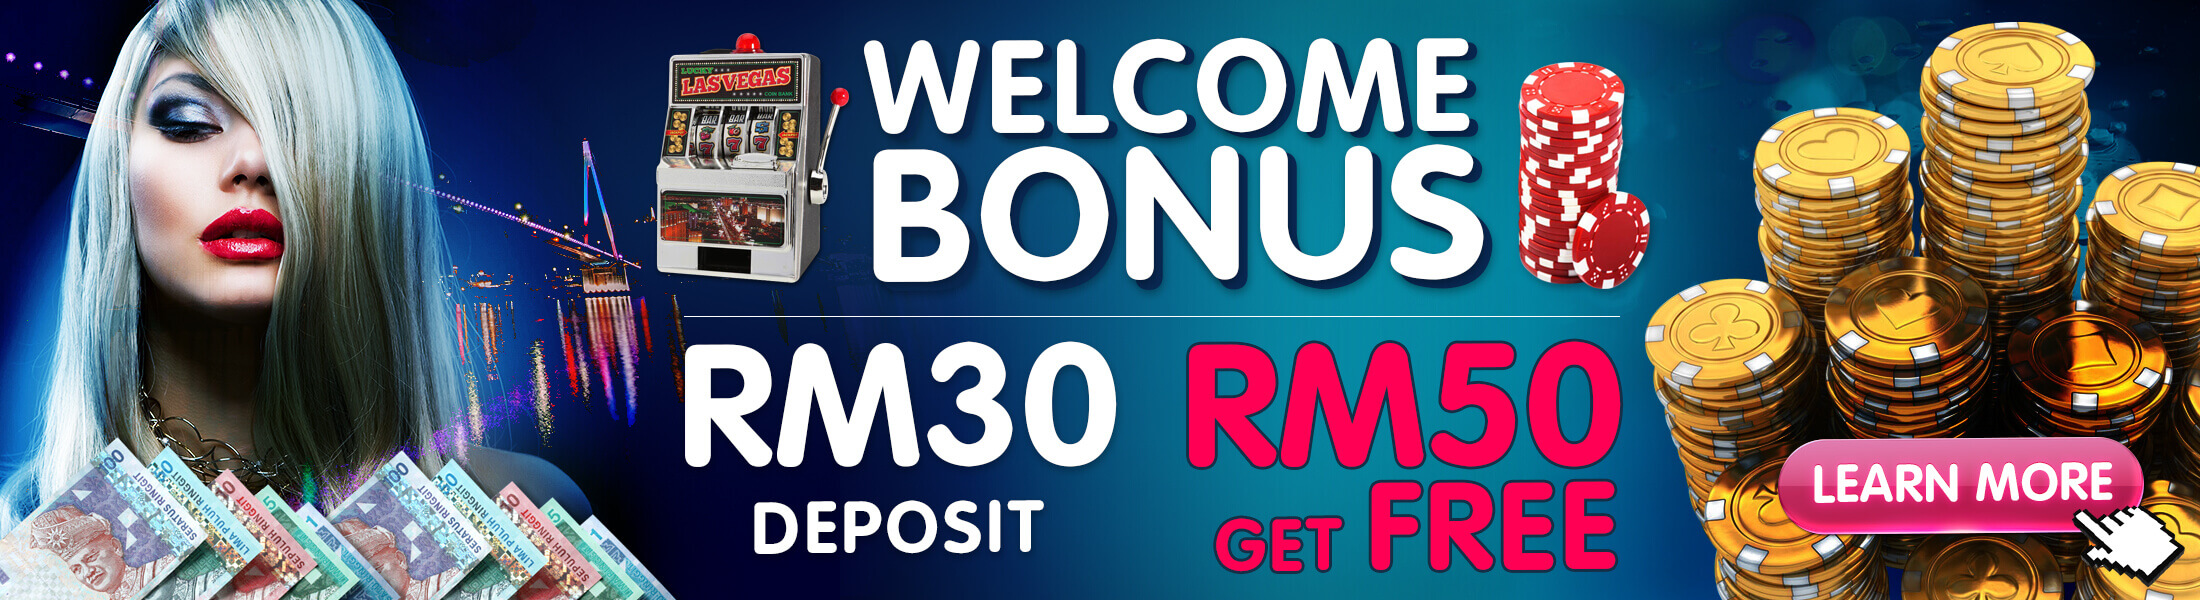 NTC33 Newtown Deposit RM 30 Free RM 50